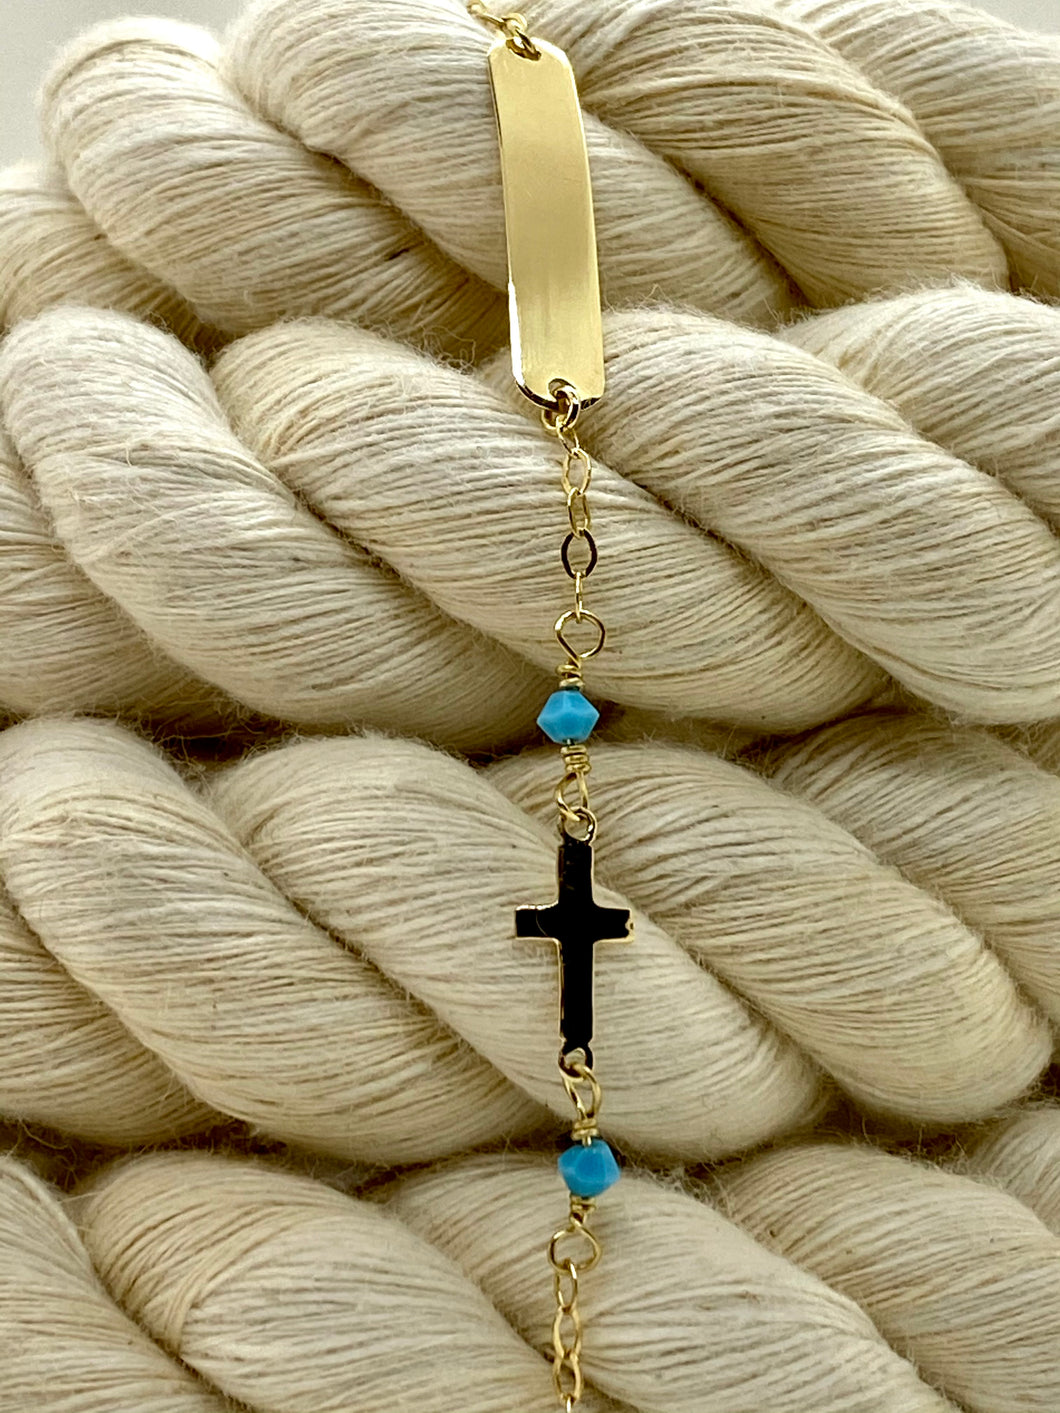 14k Gold I.D Bracelet with Cross and Light Blue Beads